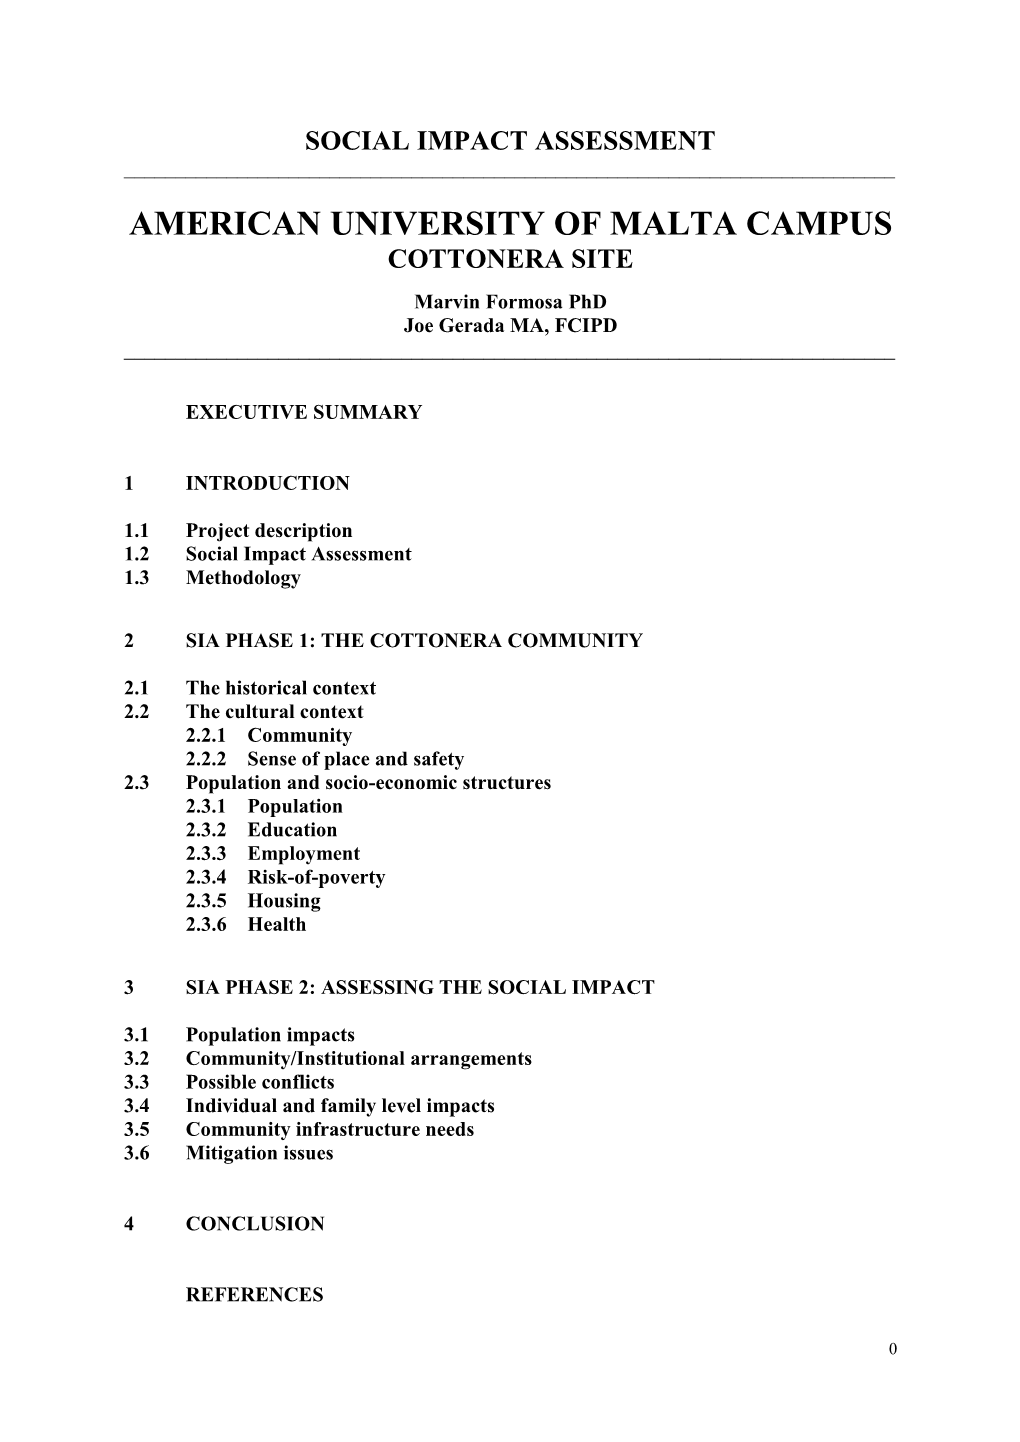 American University of Malta Campus Cottonera Site